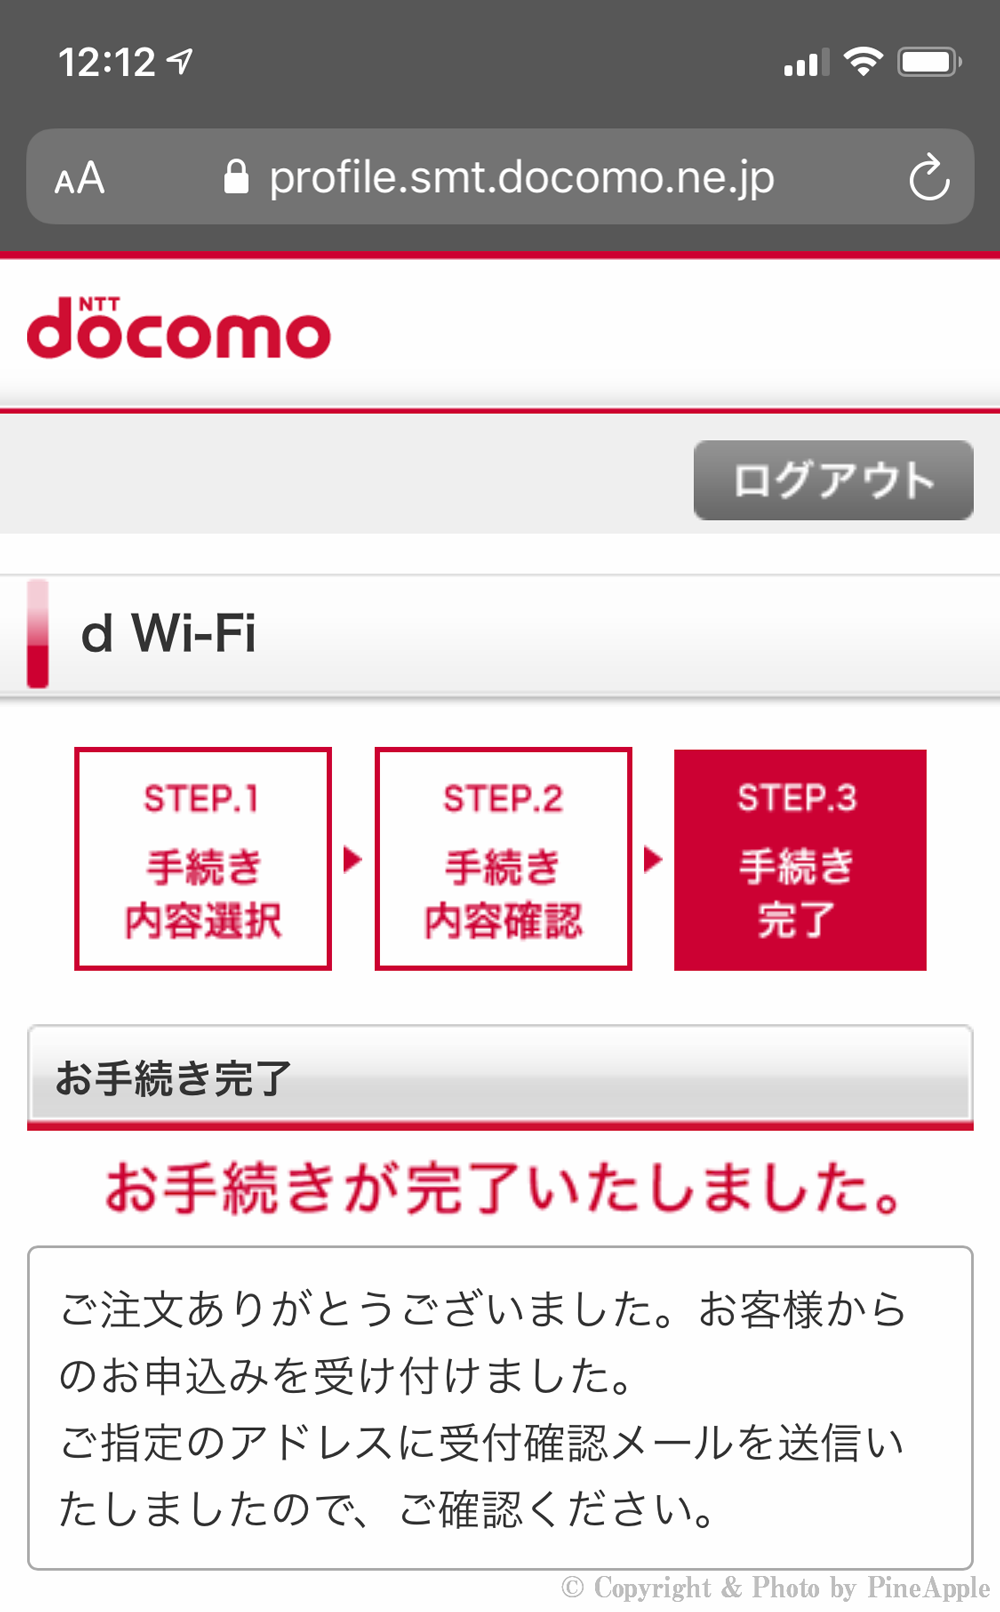 d Wi-Fi："手続き完了" 画面を確認